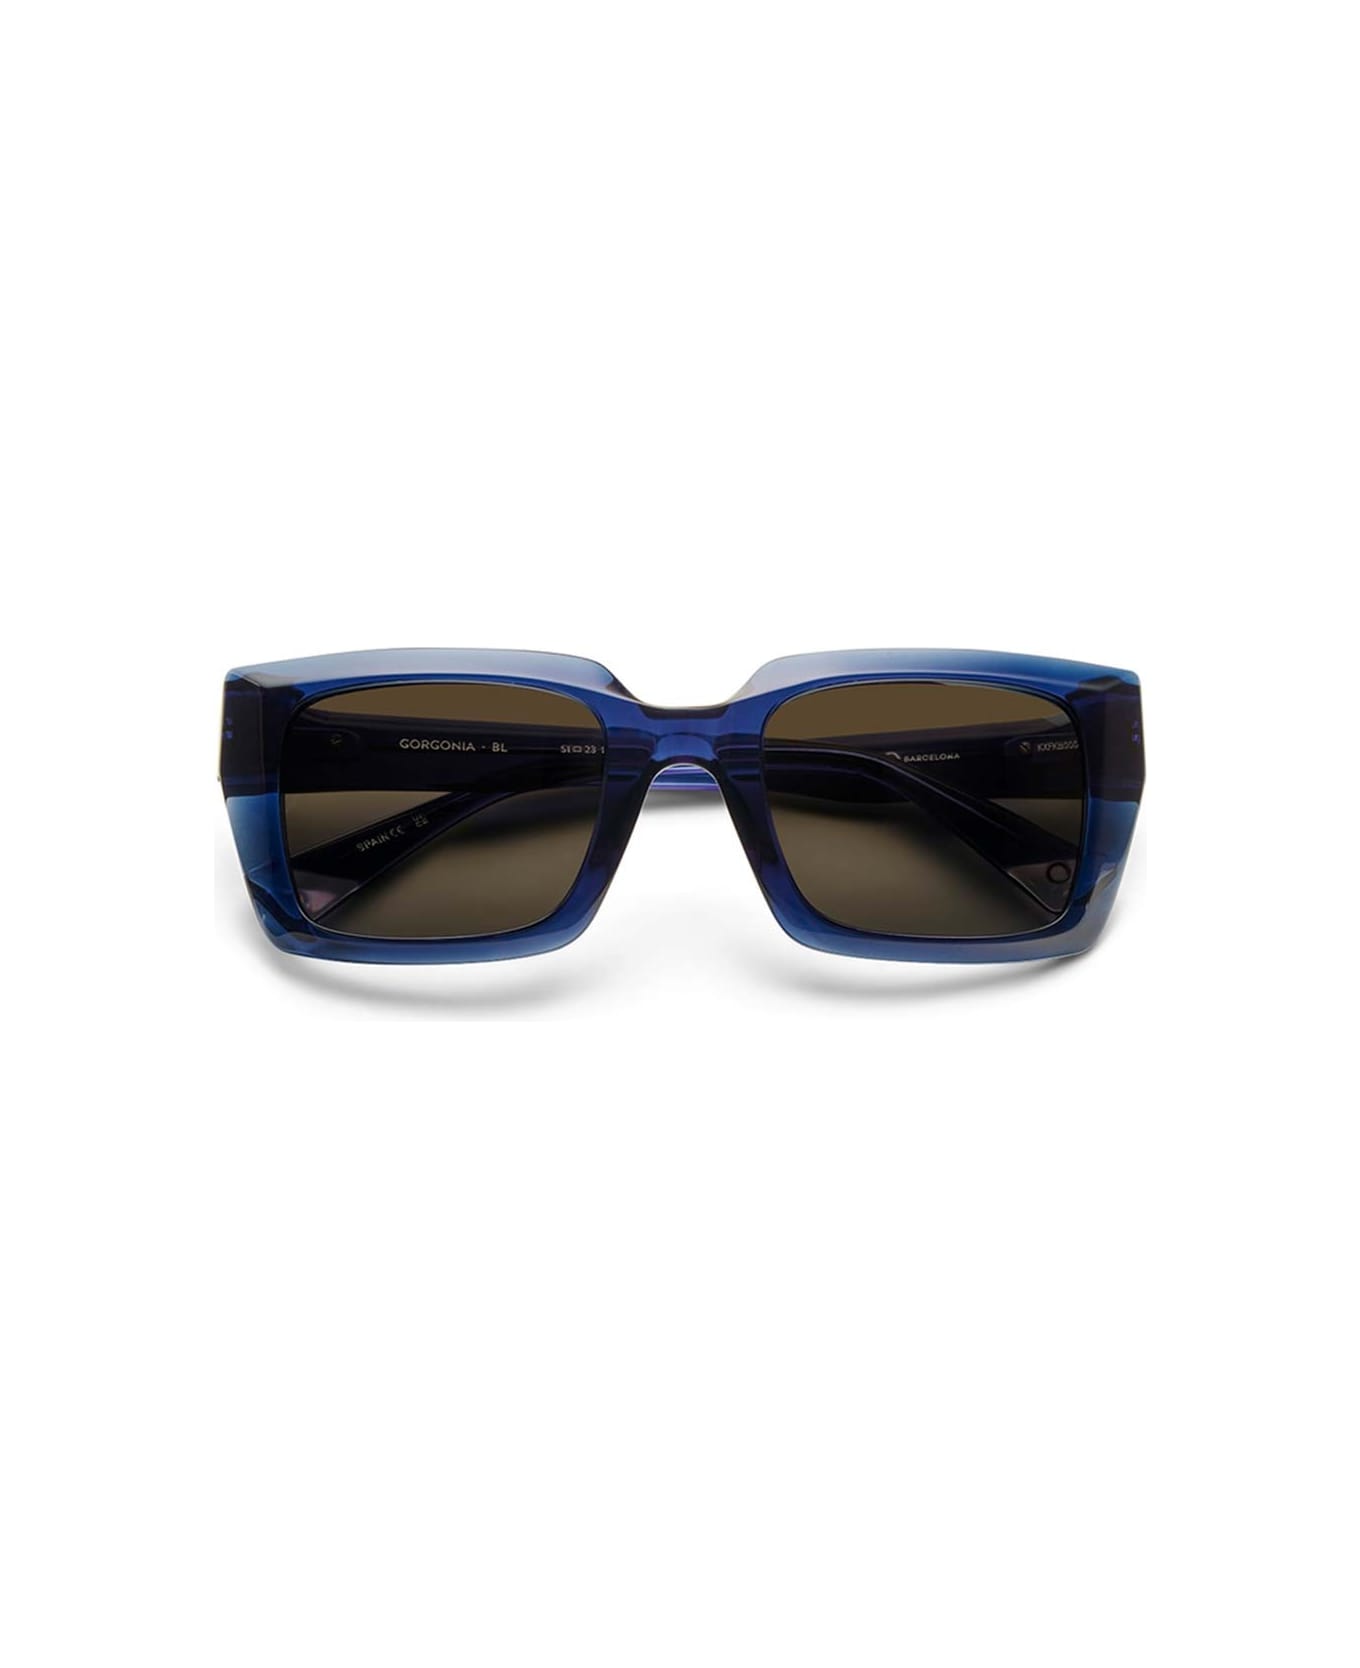 Etnia Barcelona Sunglasses - Blu/Grigio